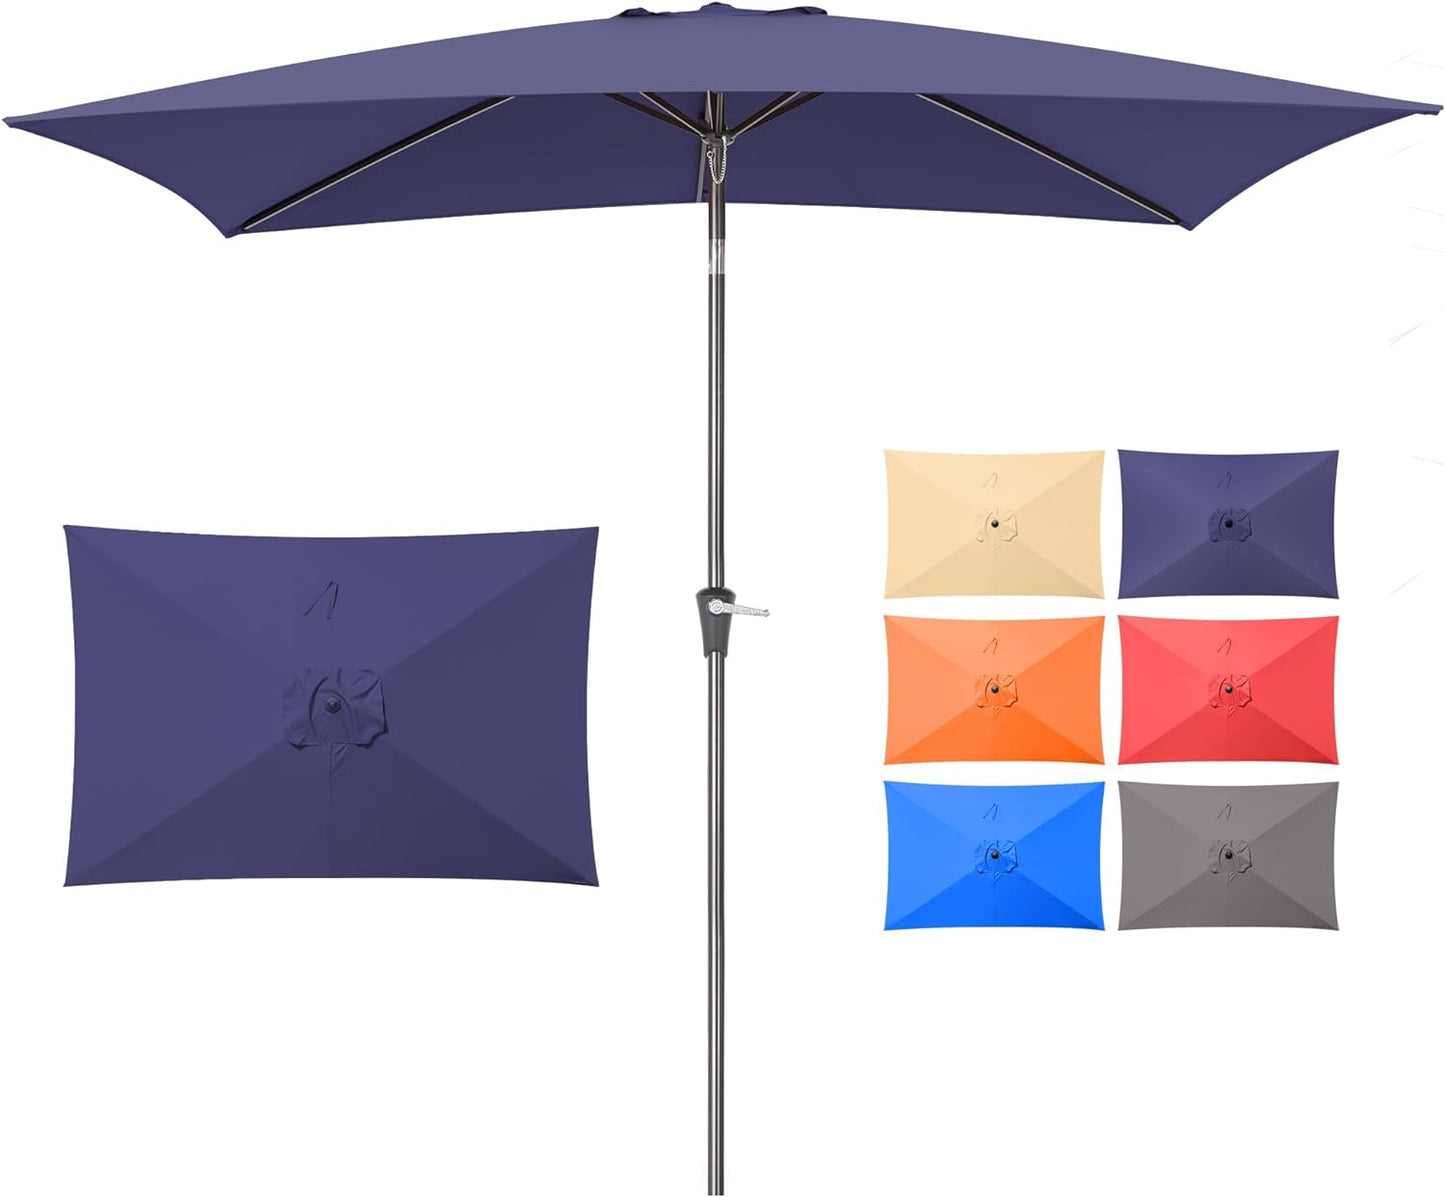 6.6x10 ft Rectangular Patio Umbrella Outdoor (Navy Blue)